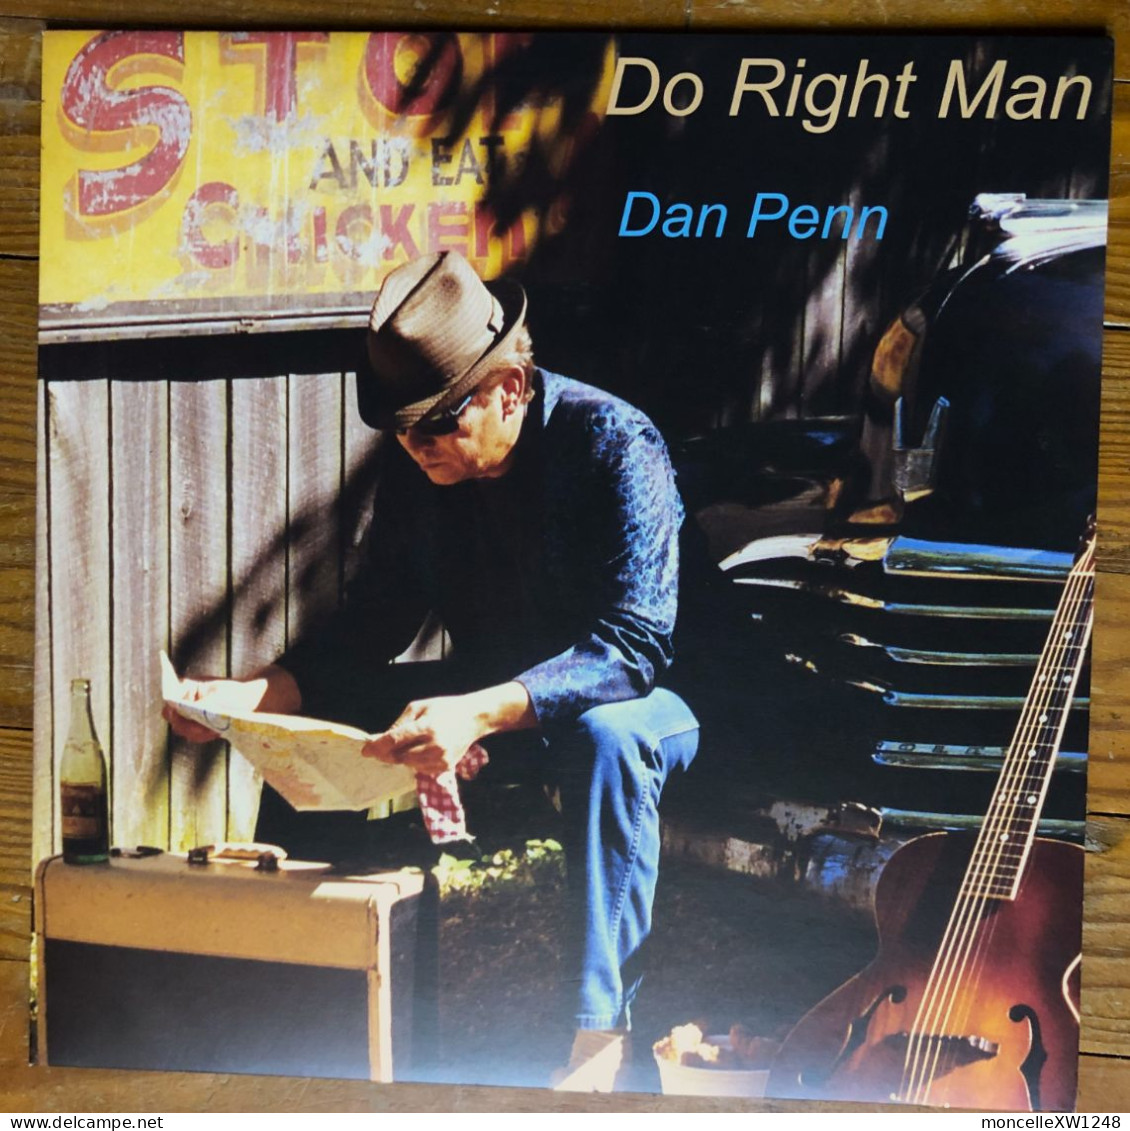 Dan Penn - 33 T LP Do Right Man (2013) - Country Y Folk